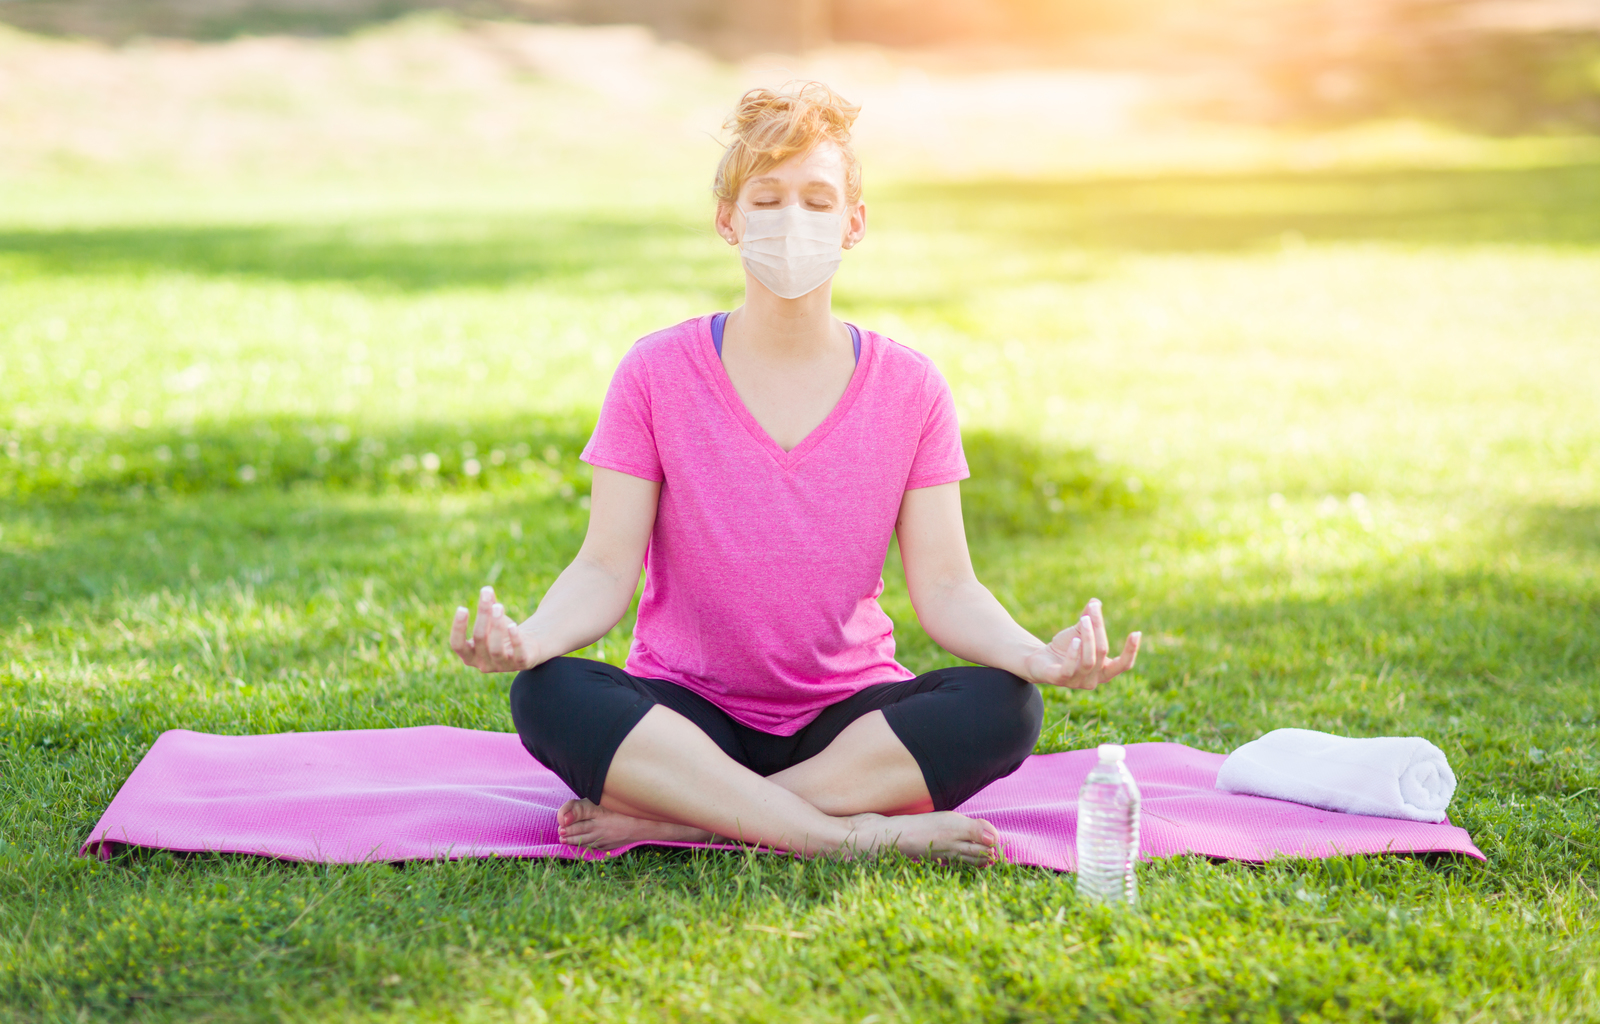 Best Meditation Guide for Beginners - Girl Wearing Medical Face Mask During Yoga Meditation Workout Outdoors